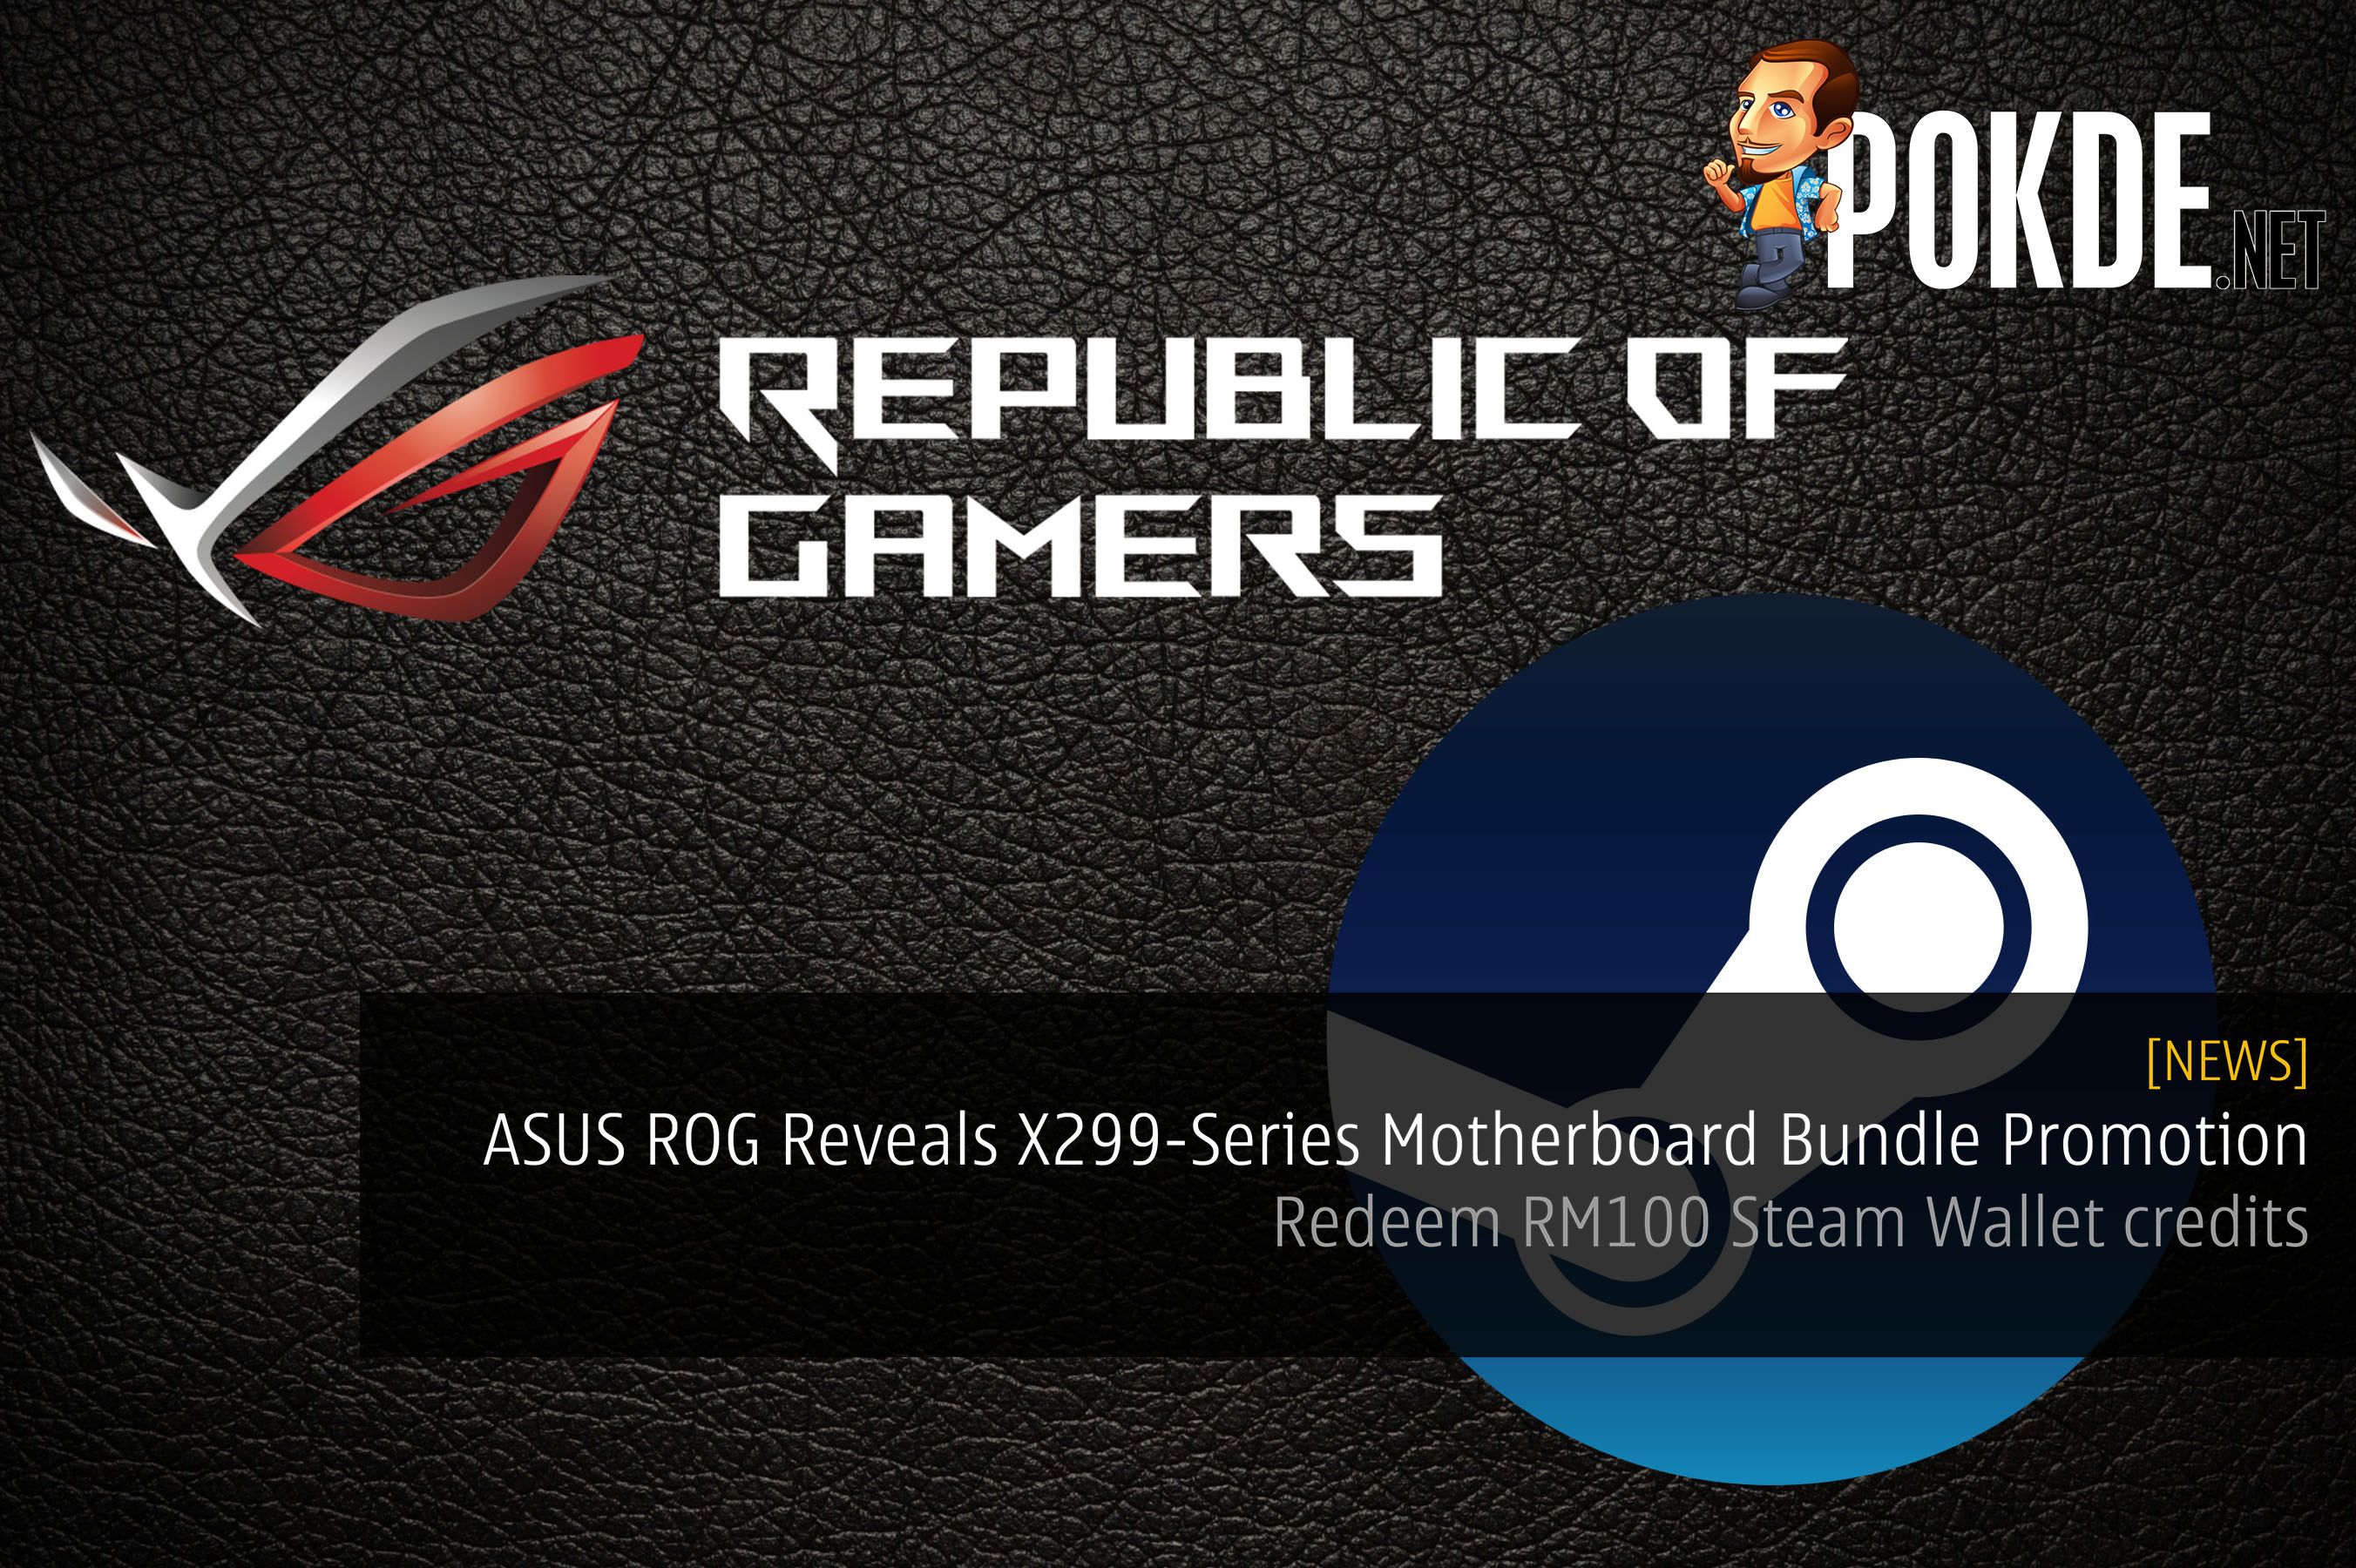 ASUS ROG Reveals X299 Motherboard Series Bundle Promotion - Redeem RM100 Steam Wallet credits 22